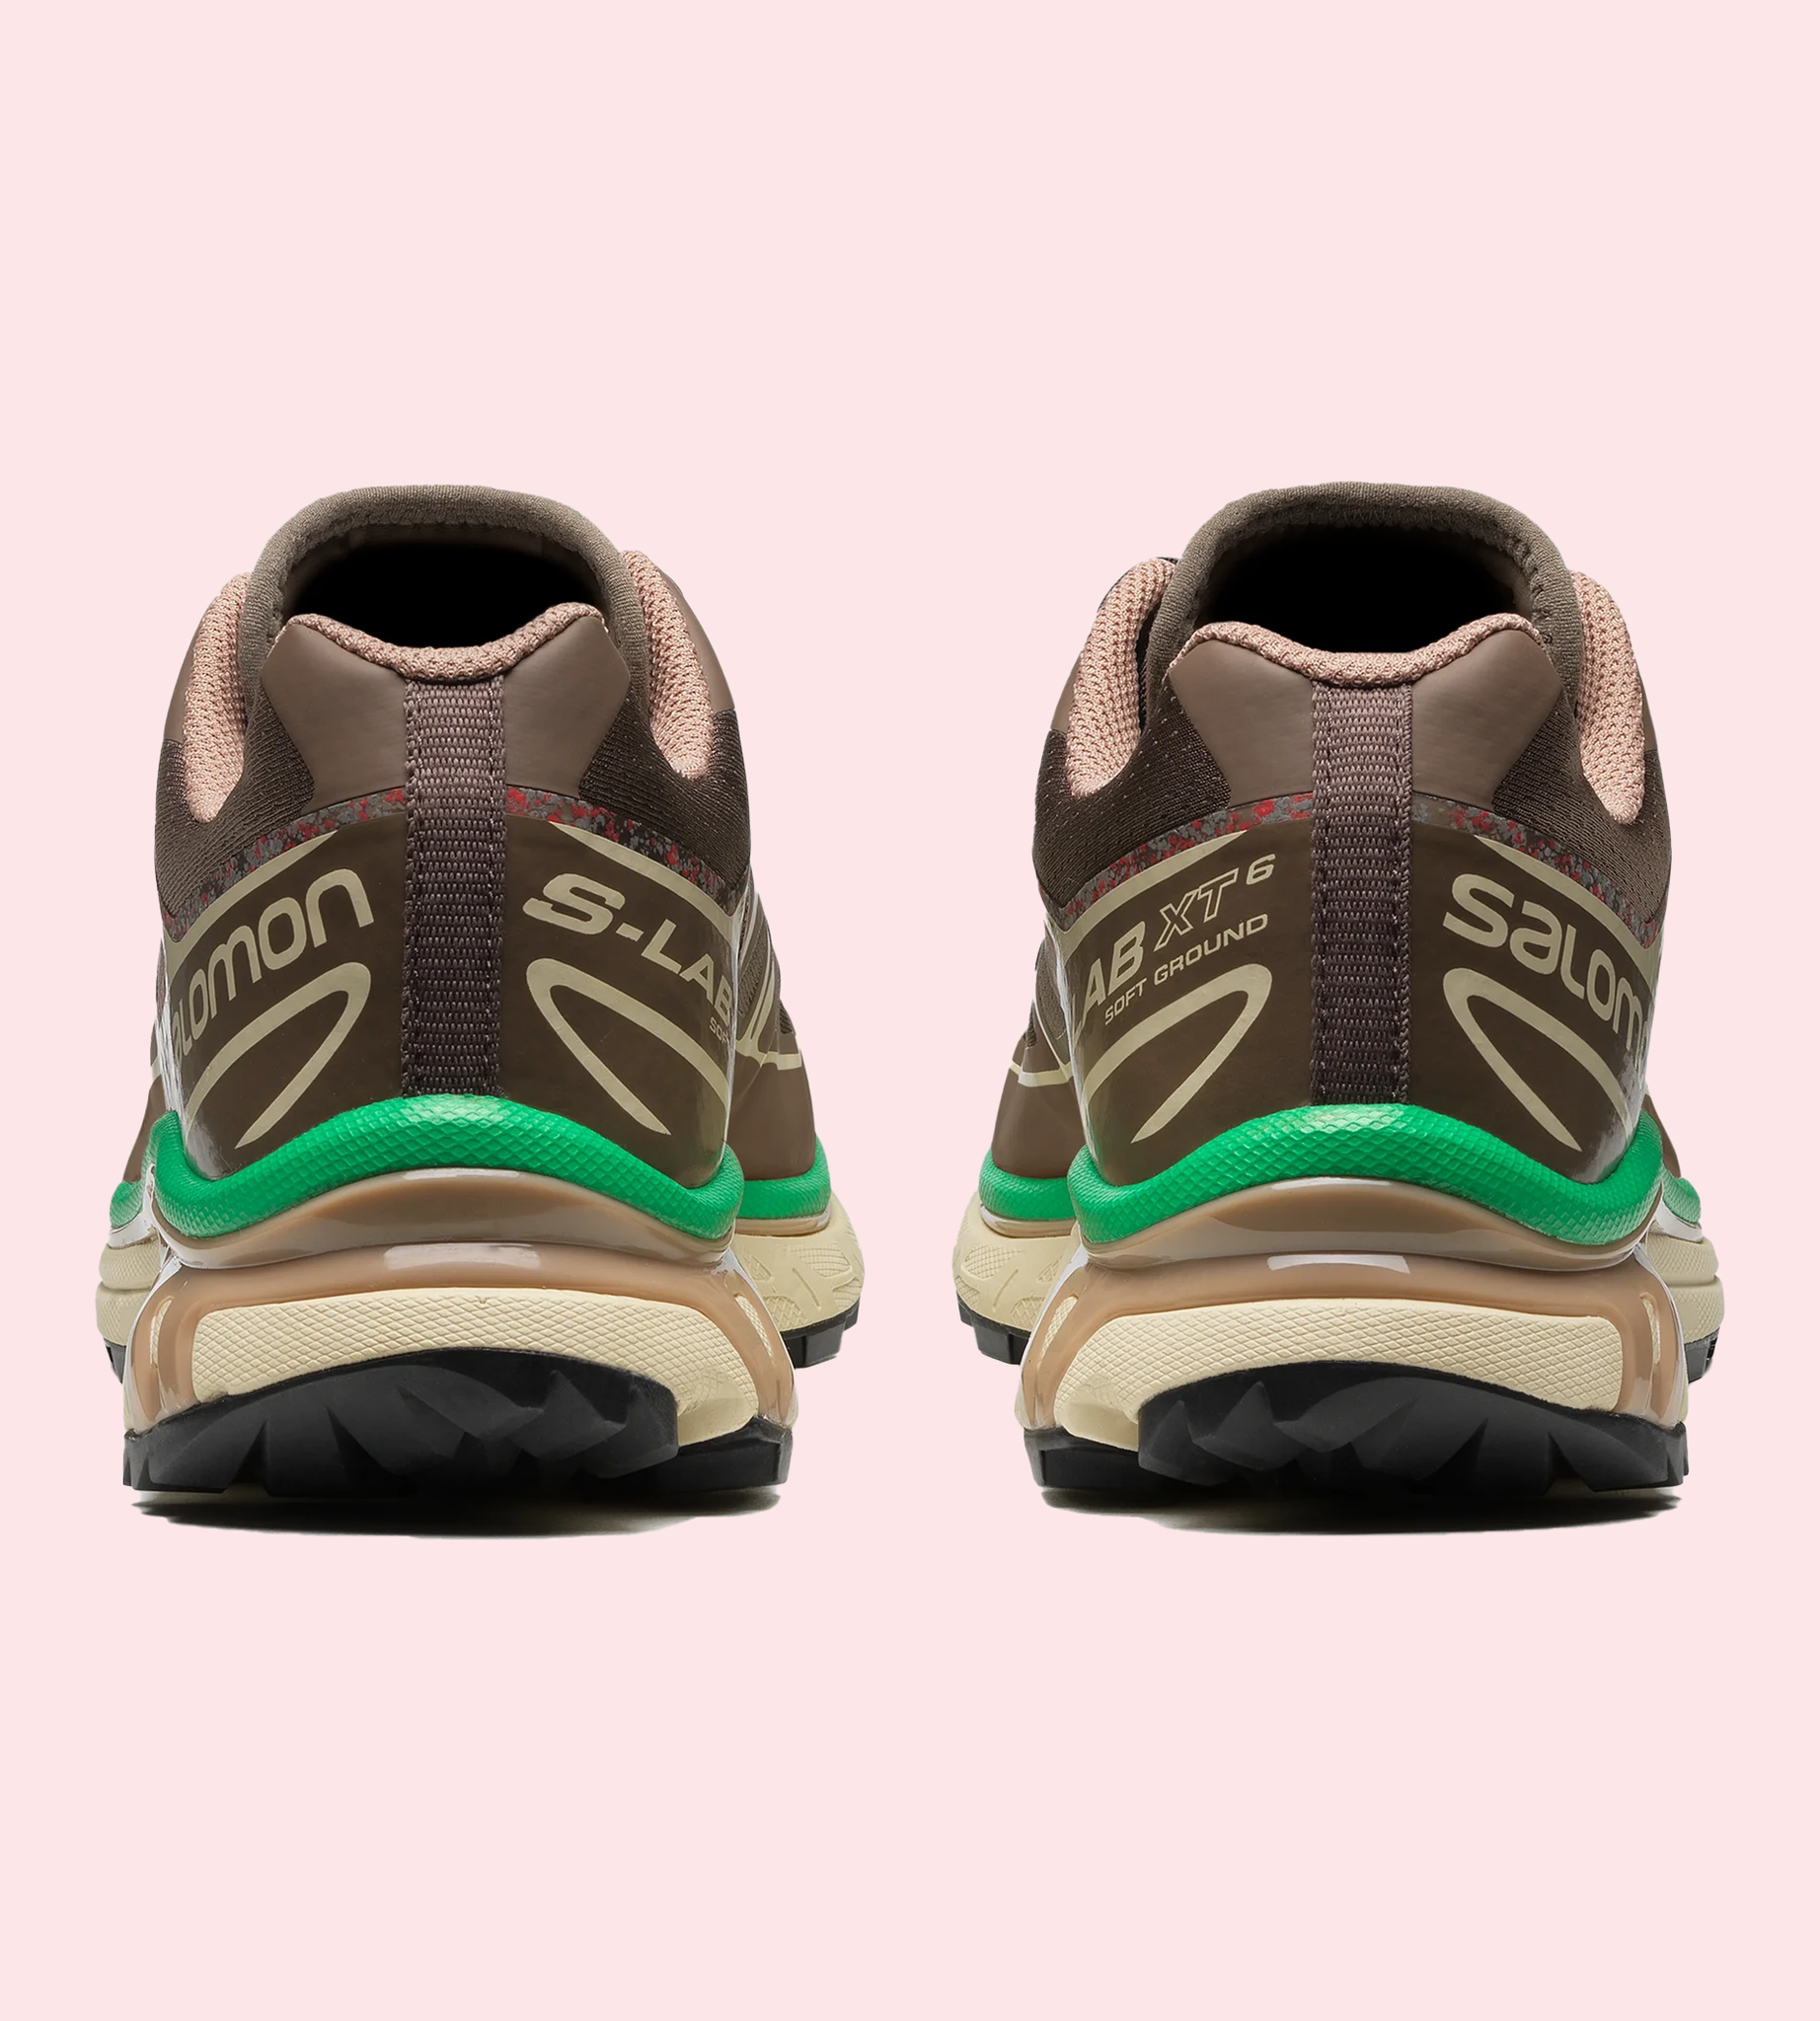 Salomon sneakers XT-6 Mindful 2 Falcon / Almond Milk / Bright Green back